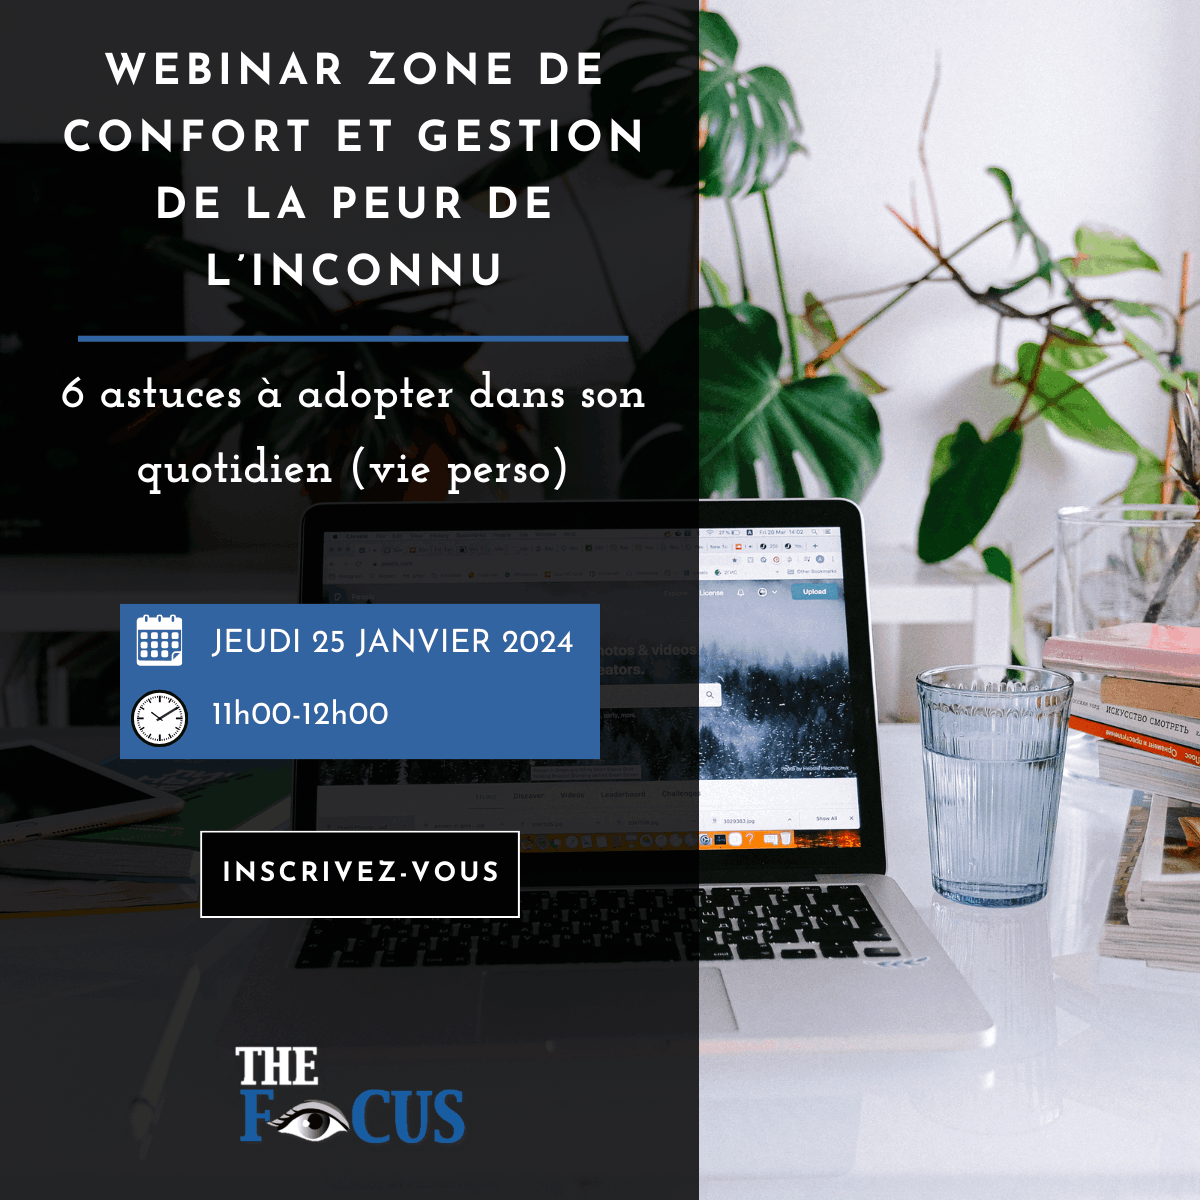 The Focus Webinar Zone de confort 